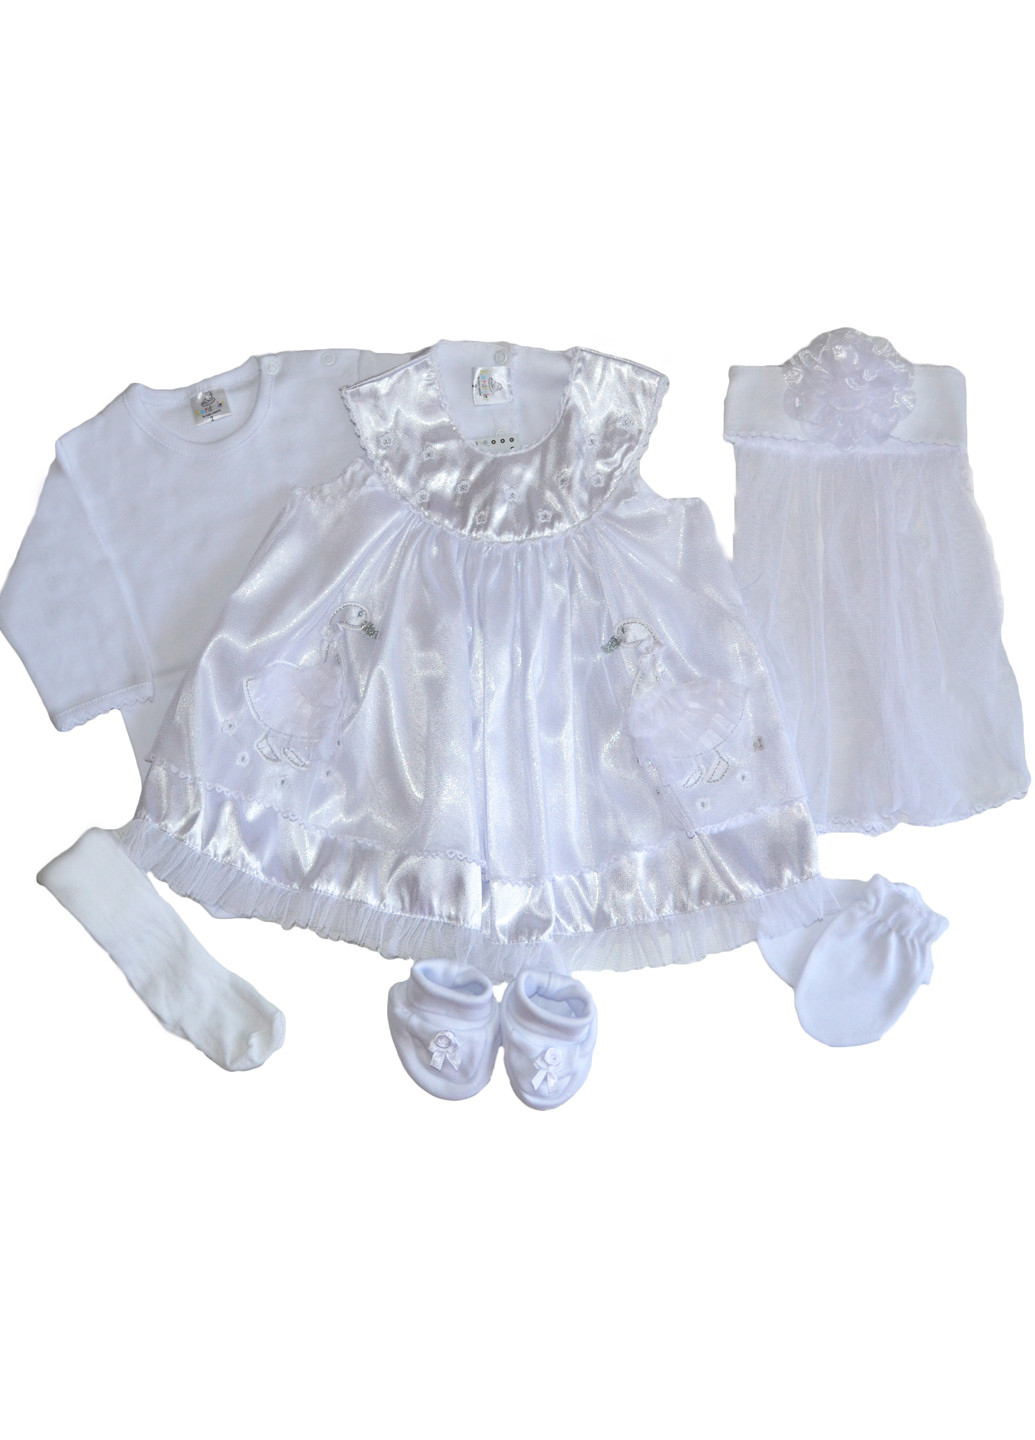 Белый демисезонный комплект (платье, боди, колготы, царапки, пинетки, повязка-фата) Kardesler